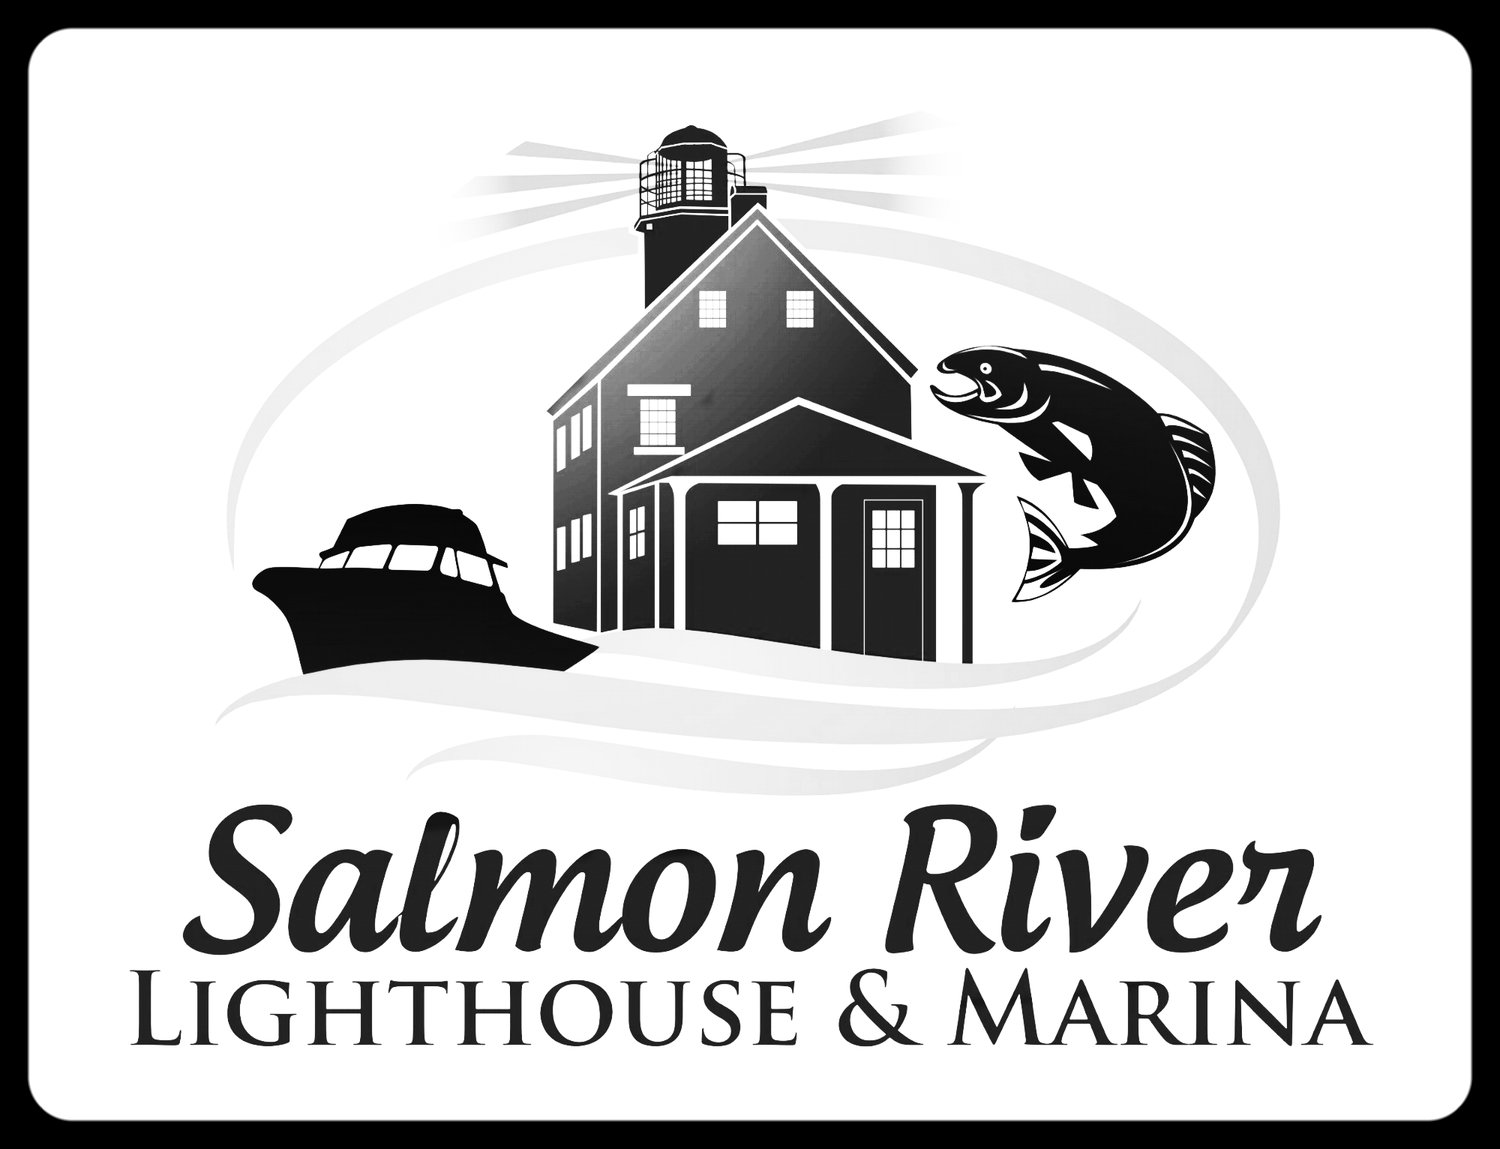 Salmon River Lighthouse & Marina